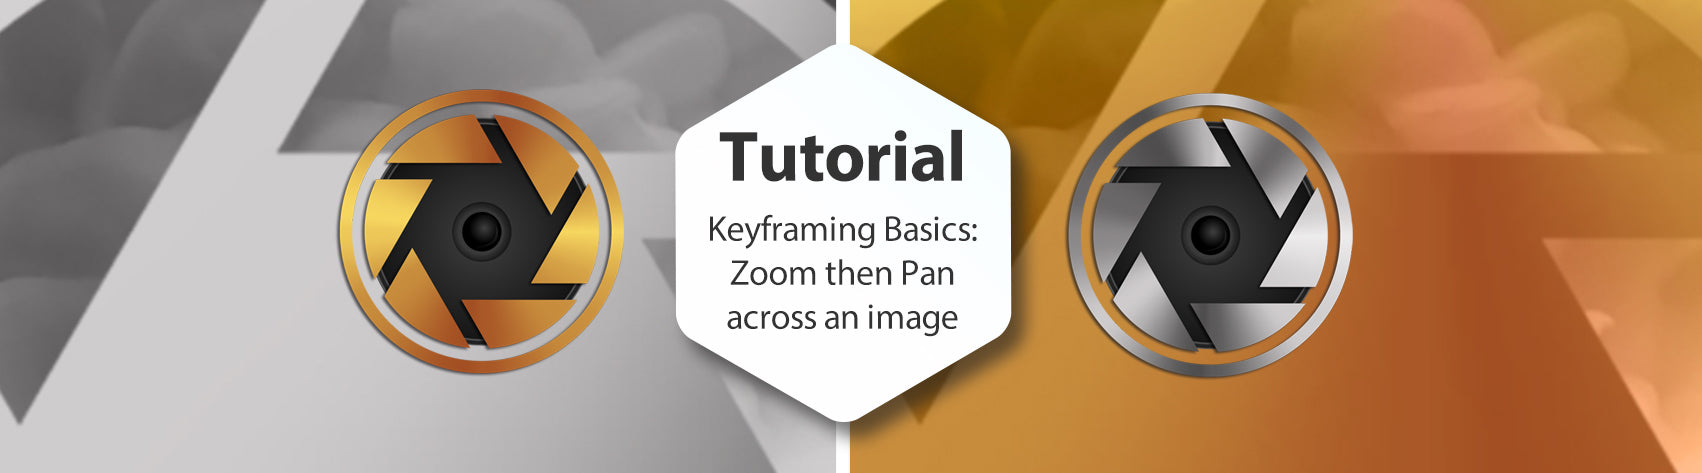 Lesson - Keyframing Basics: Zoom then Pan across an image